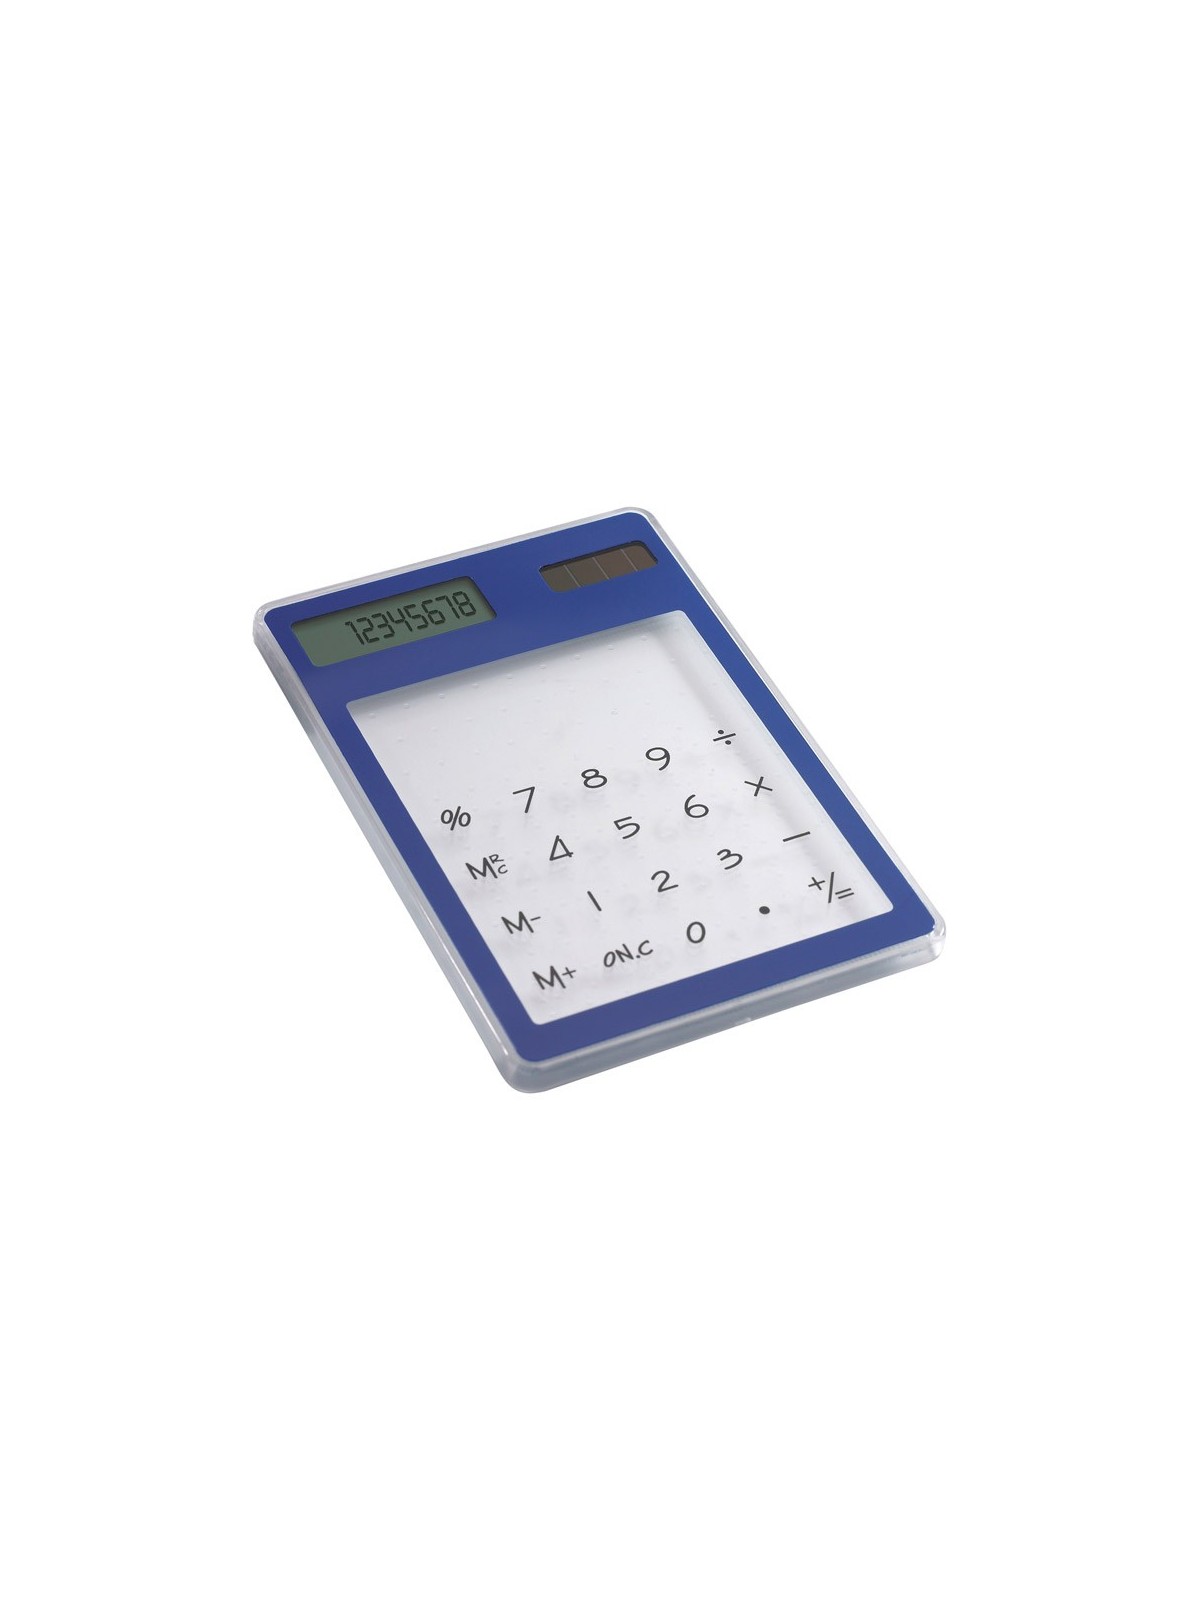 41-893 Calculatrice solaire Clearal personnalisé